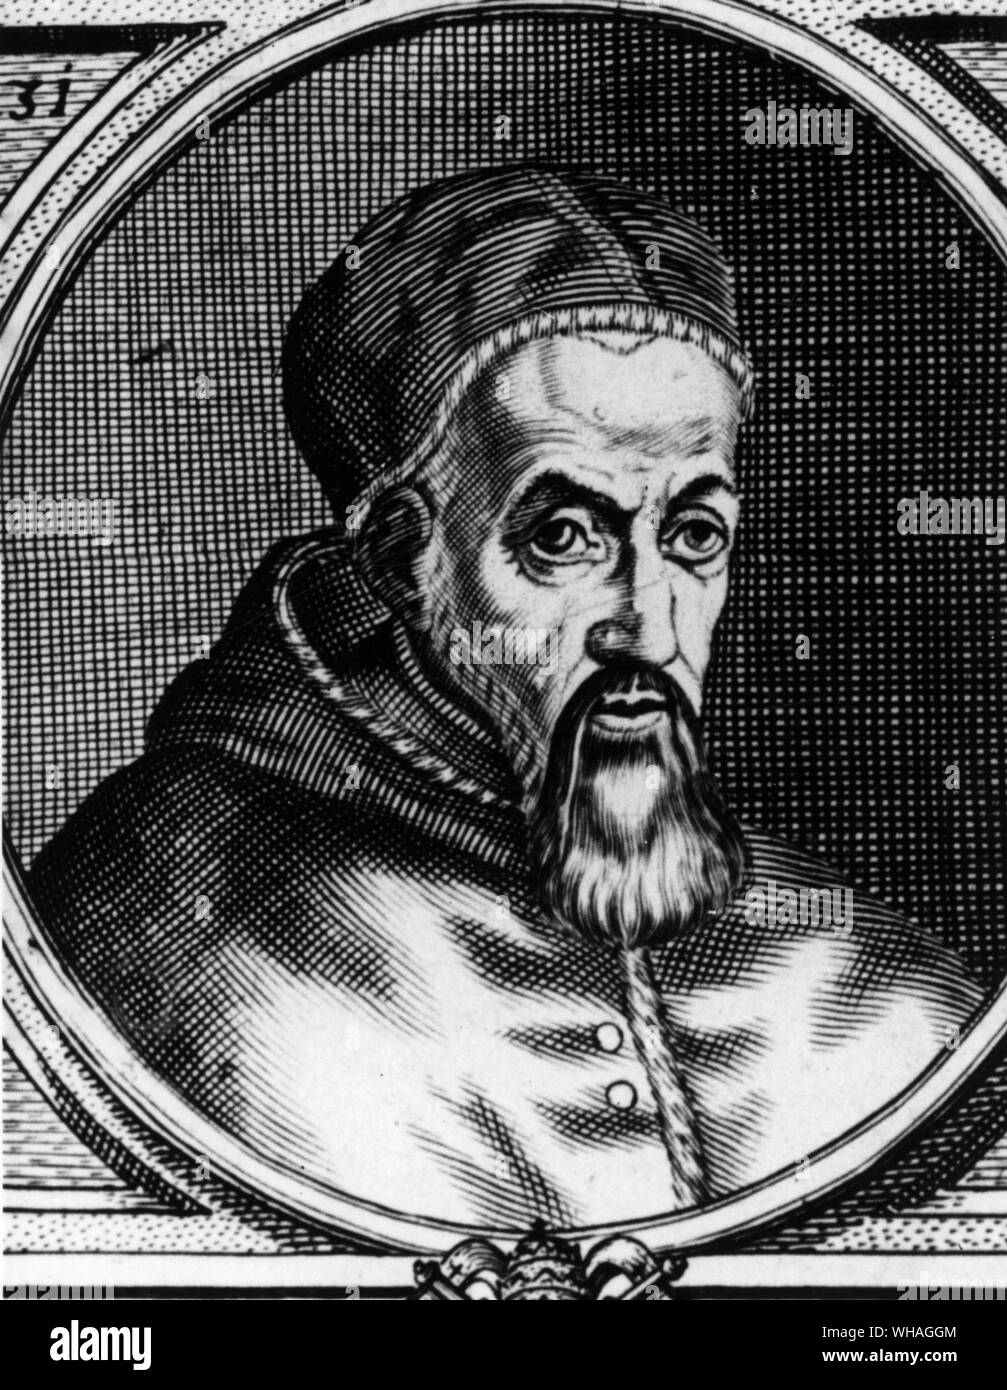 Papst Innozenz IX 1591. Innozenz IX (orig. Giovanni Antonio Facchinetti) Italienische Papst 1591 1519-1591. . . . . Stockfoto